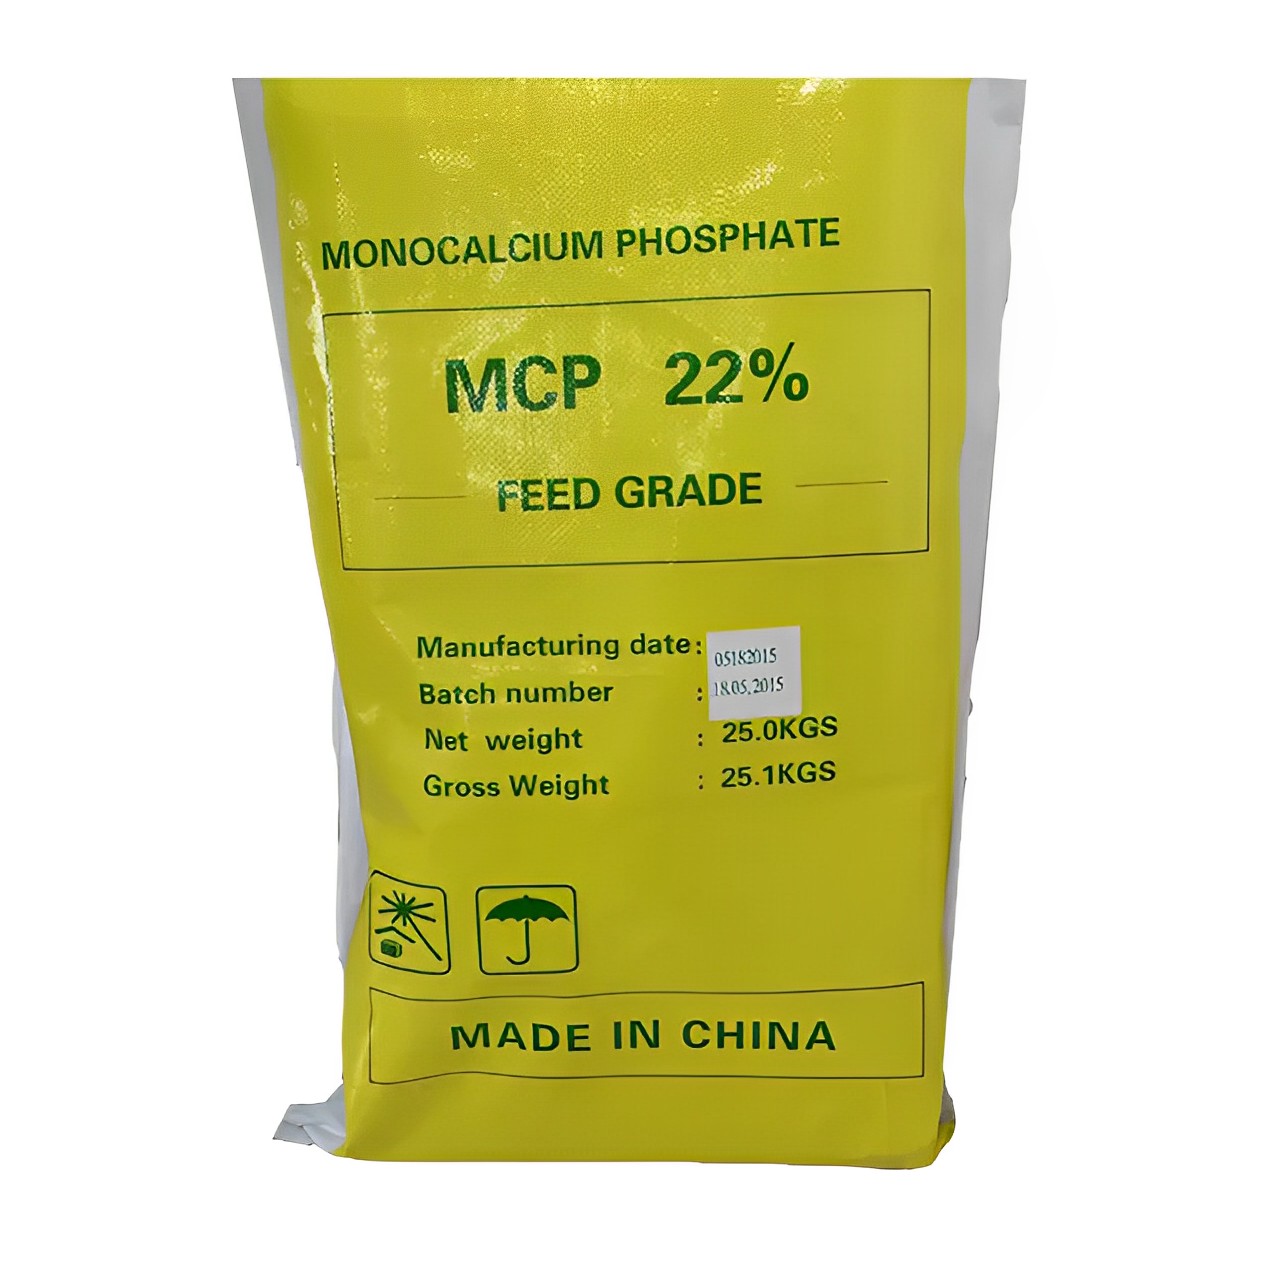 MCP( Monocalcium phosphate)